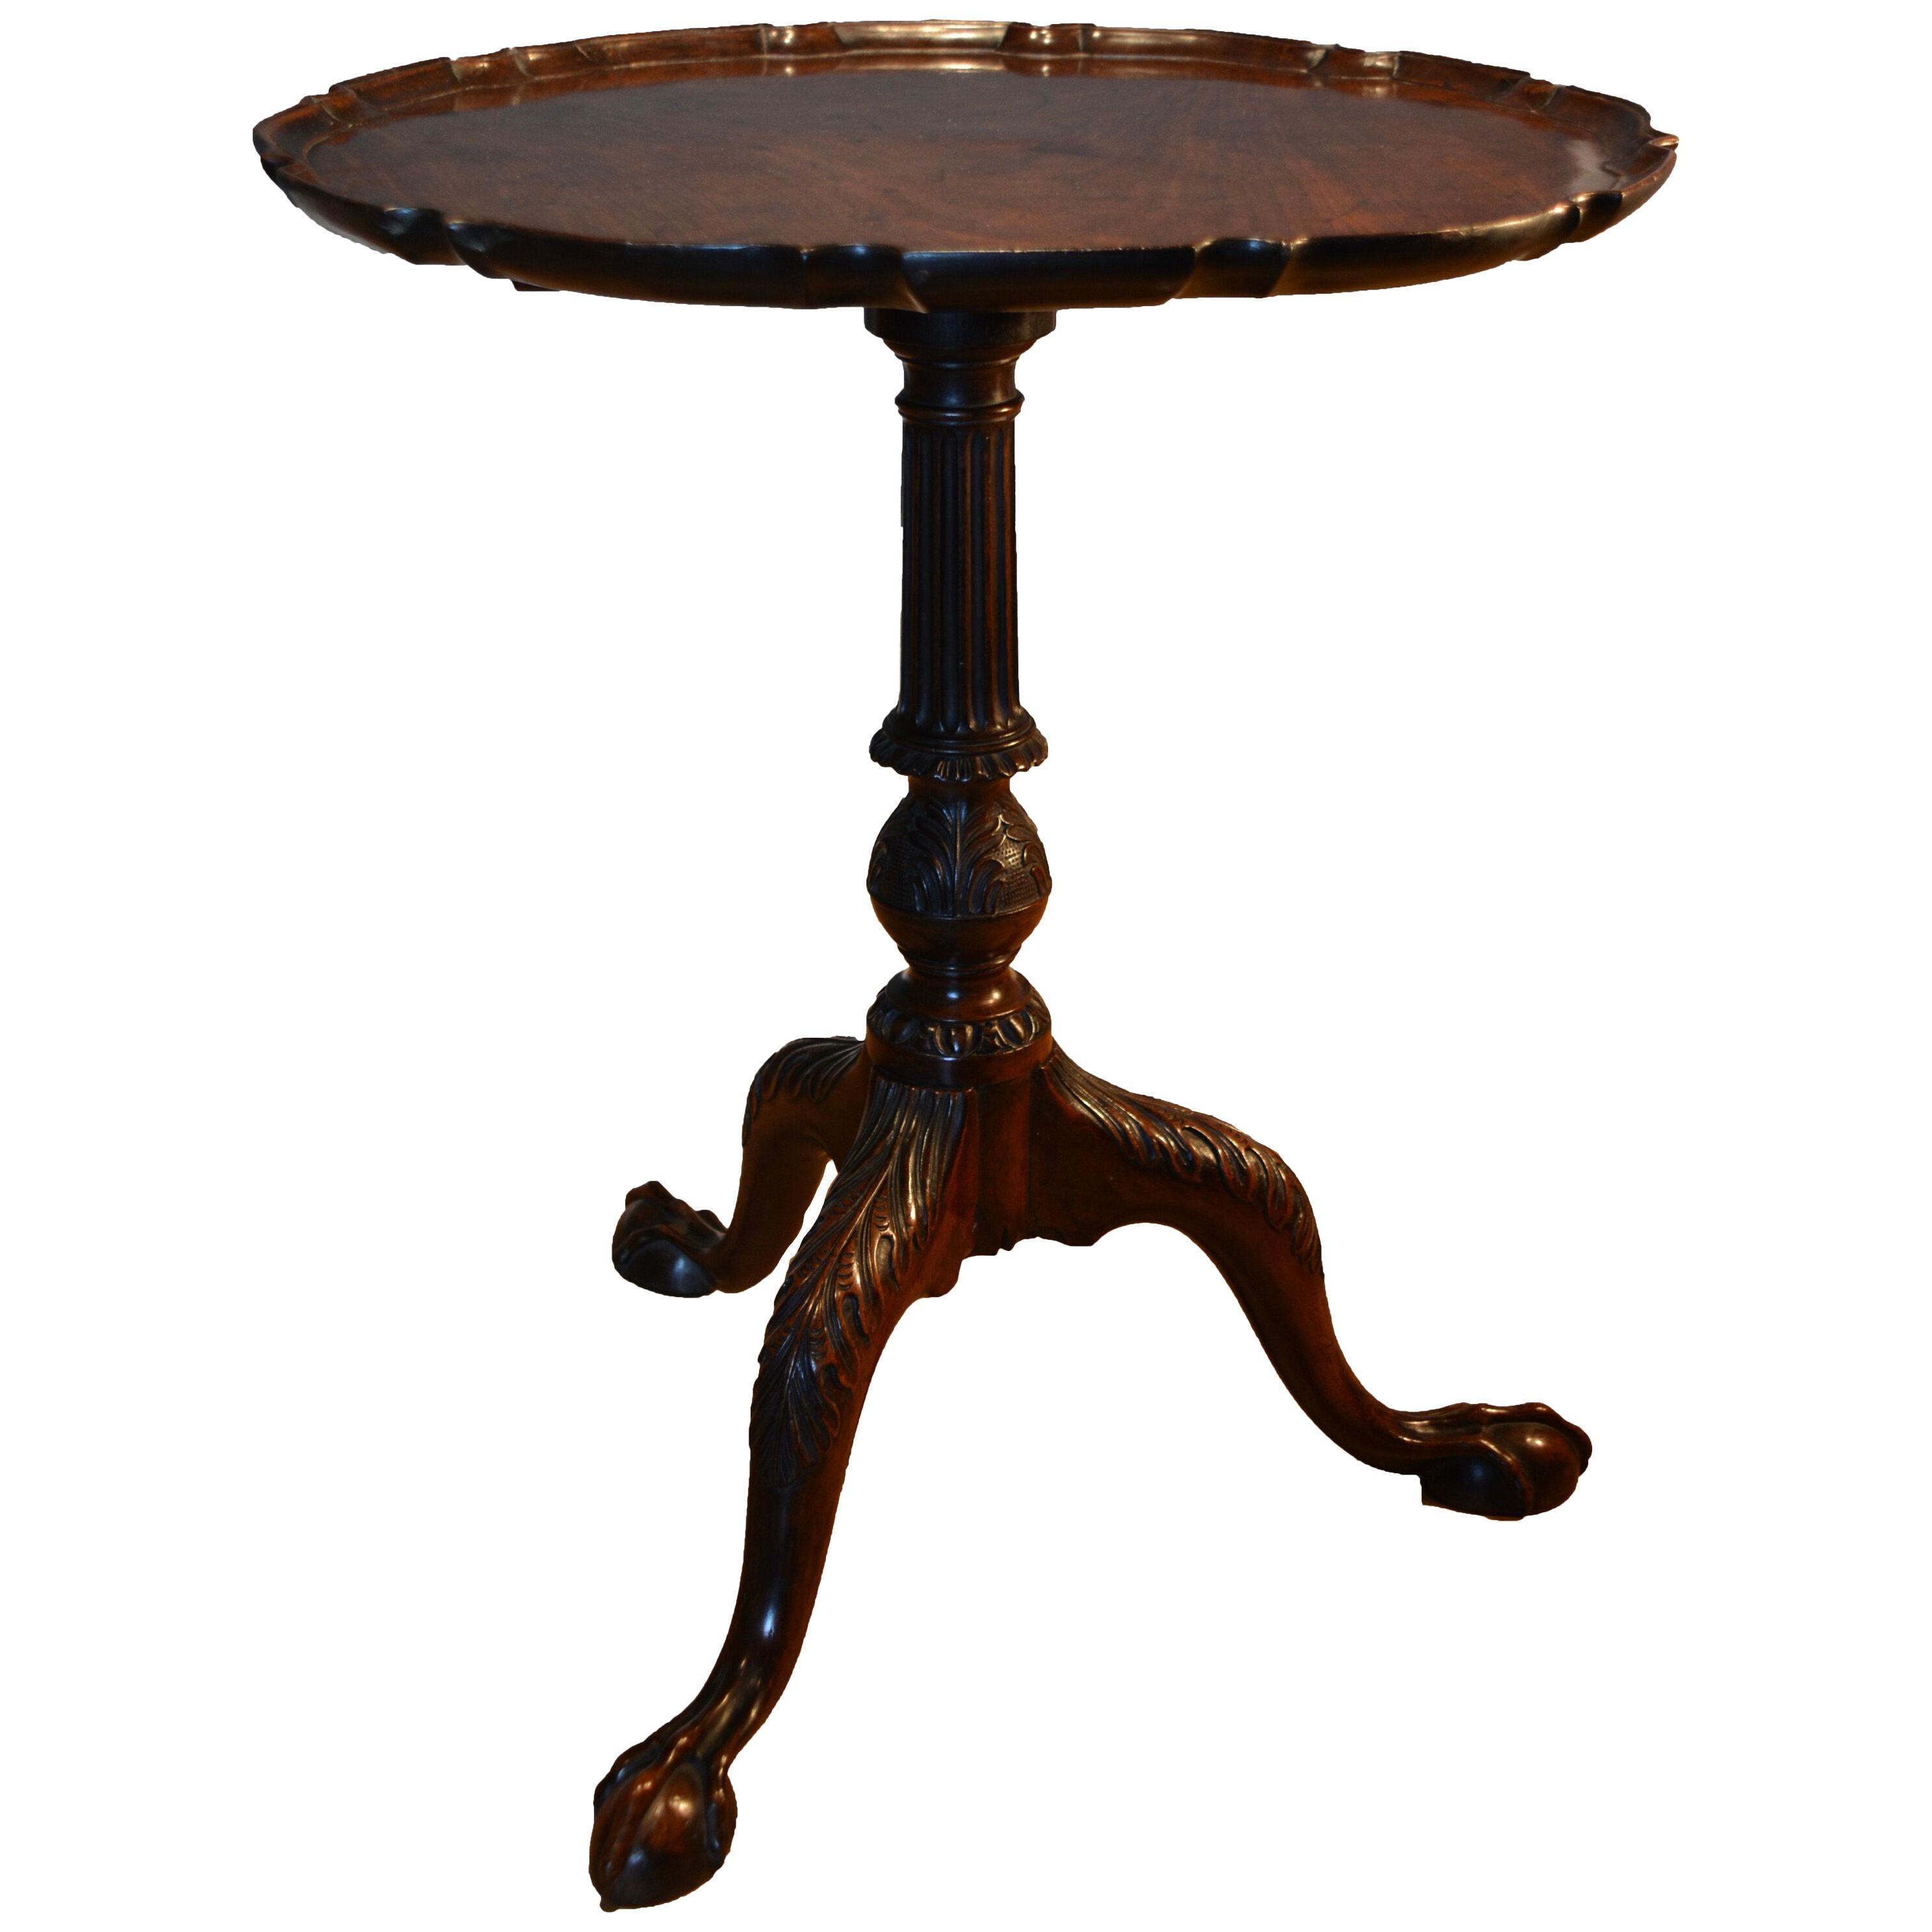 A Fine Chippendale period mahogany pie-crust tripod table